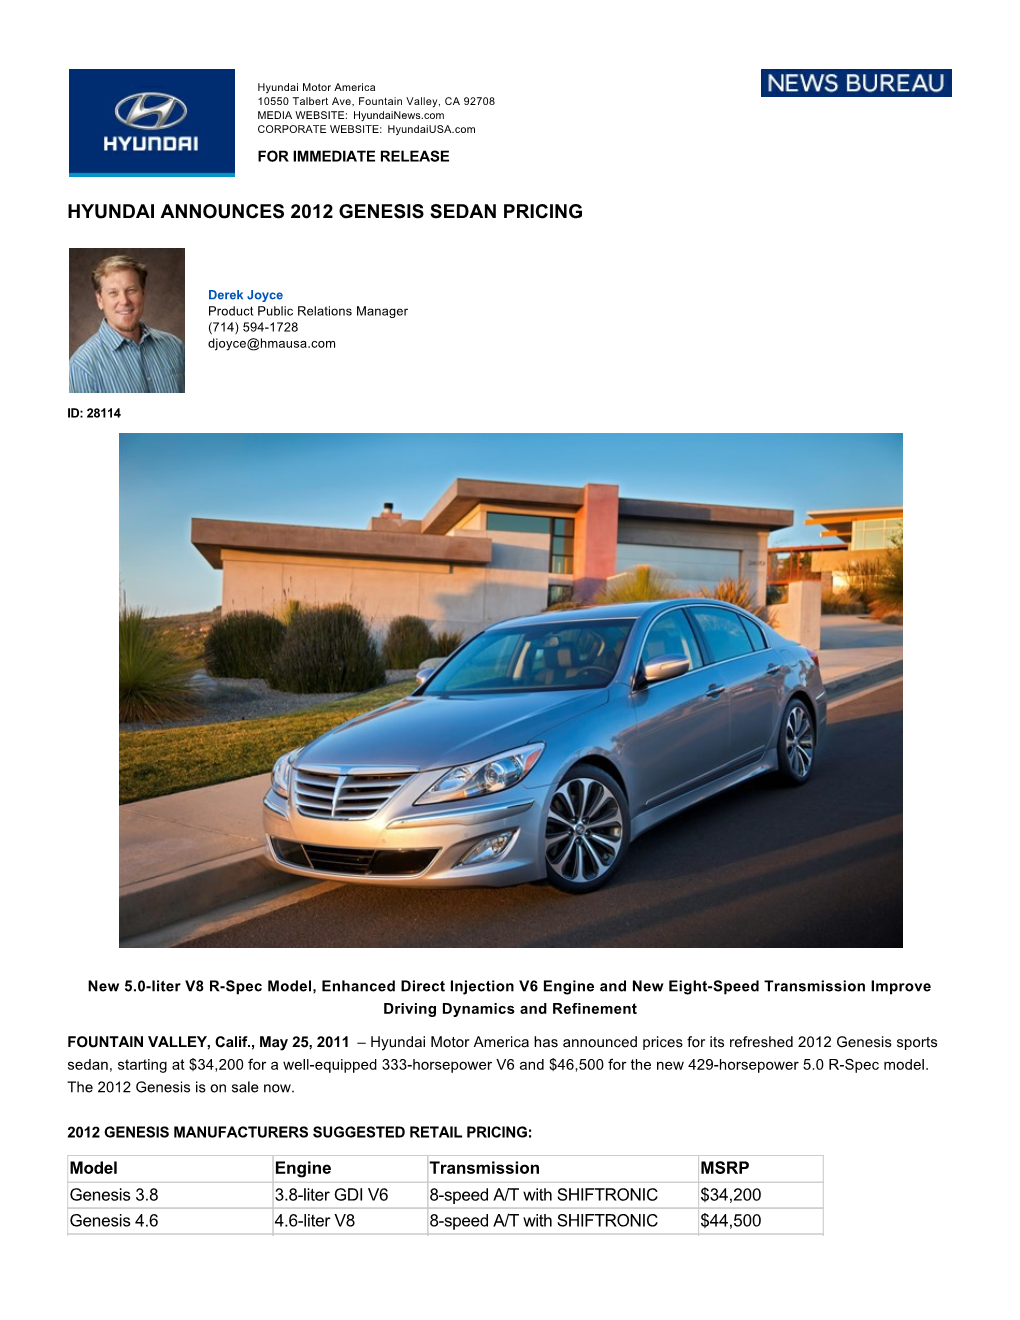 Hyundai Announces 2012 Genesis Sedan Pricing